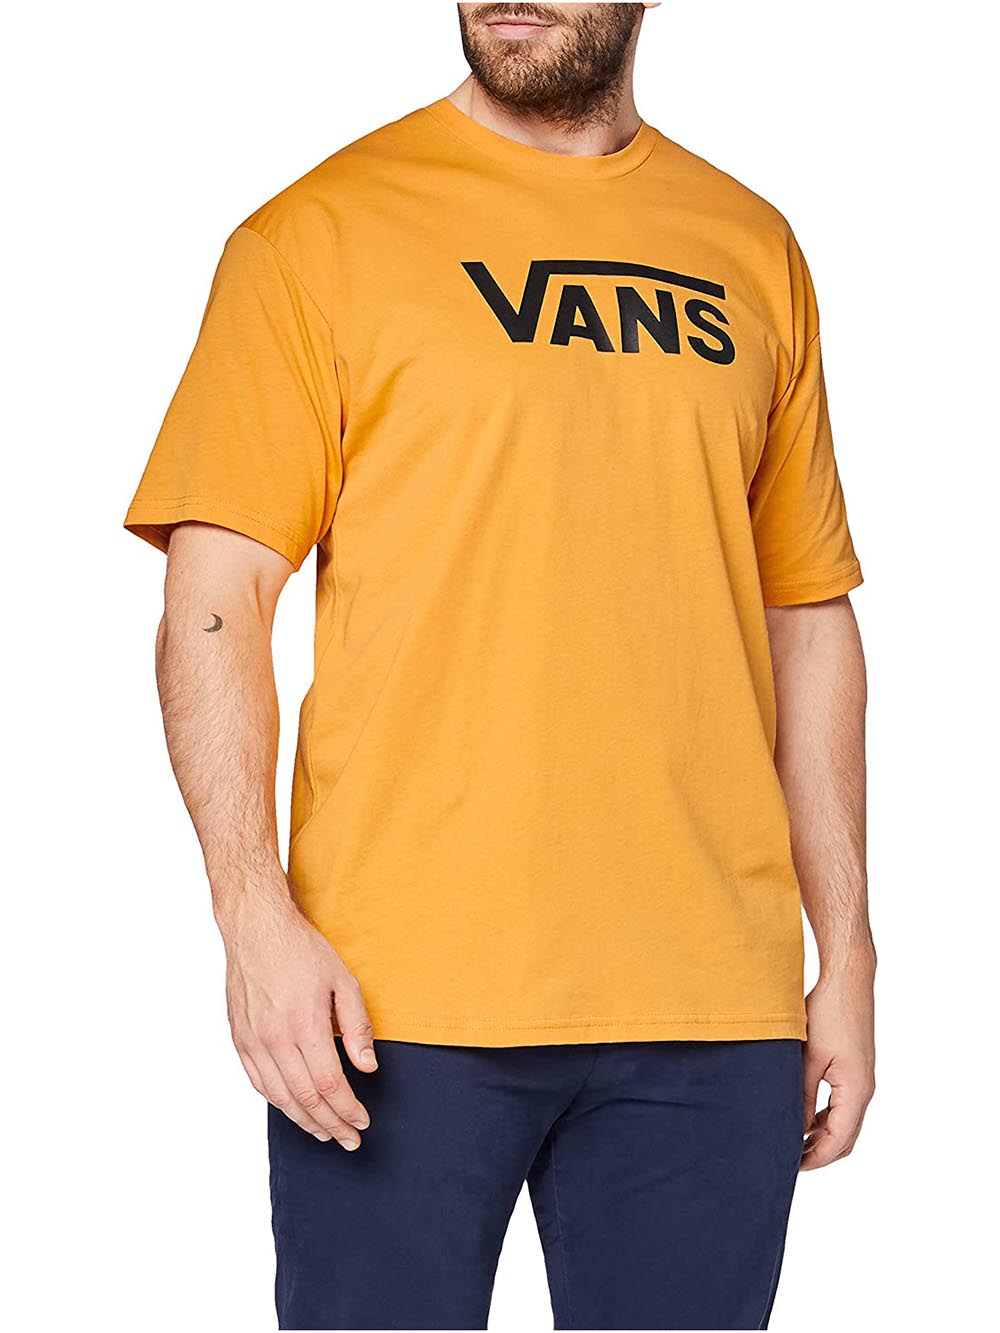 VANS T-shirt Uomo Giallo